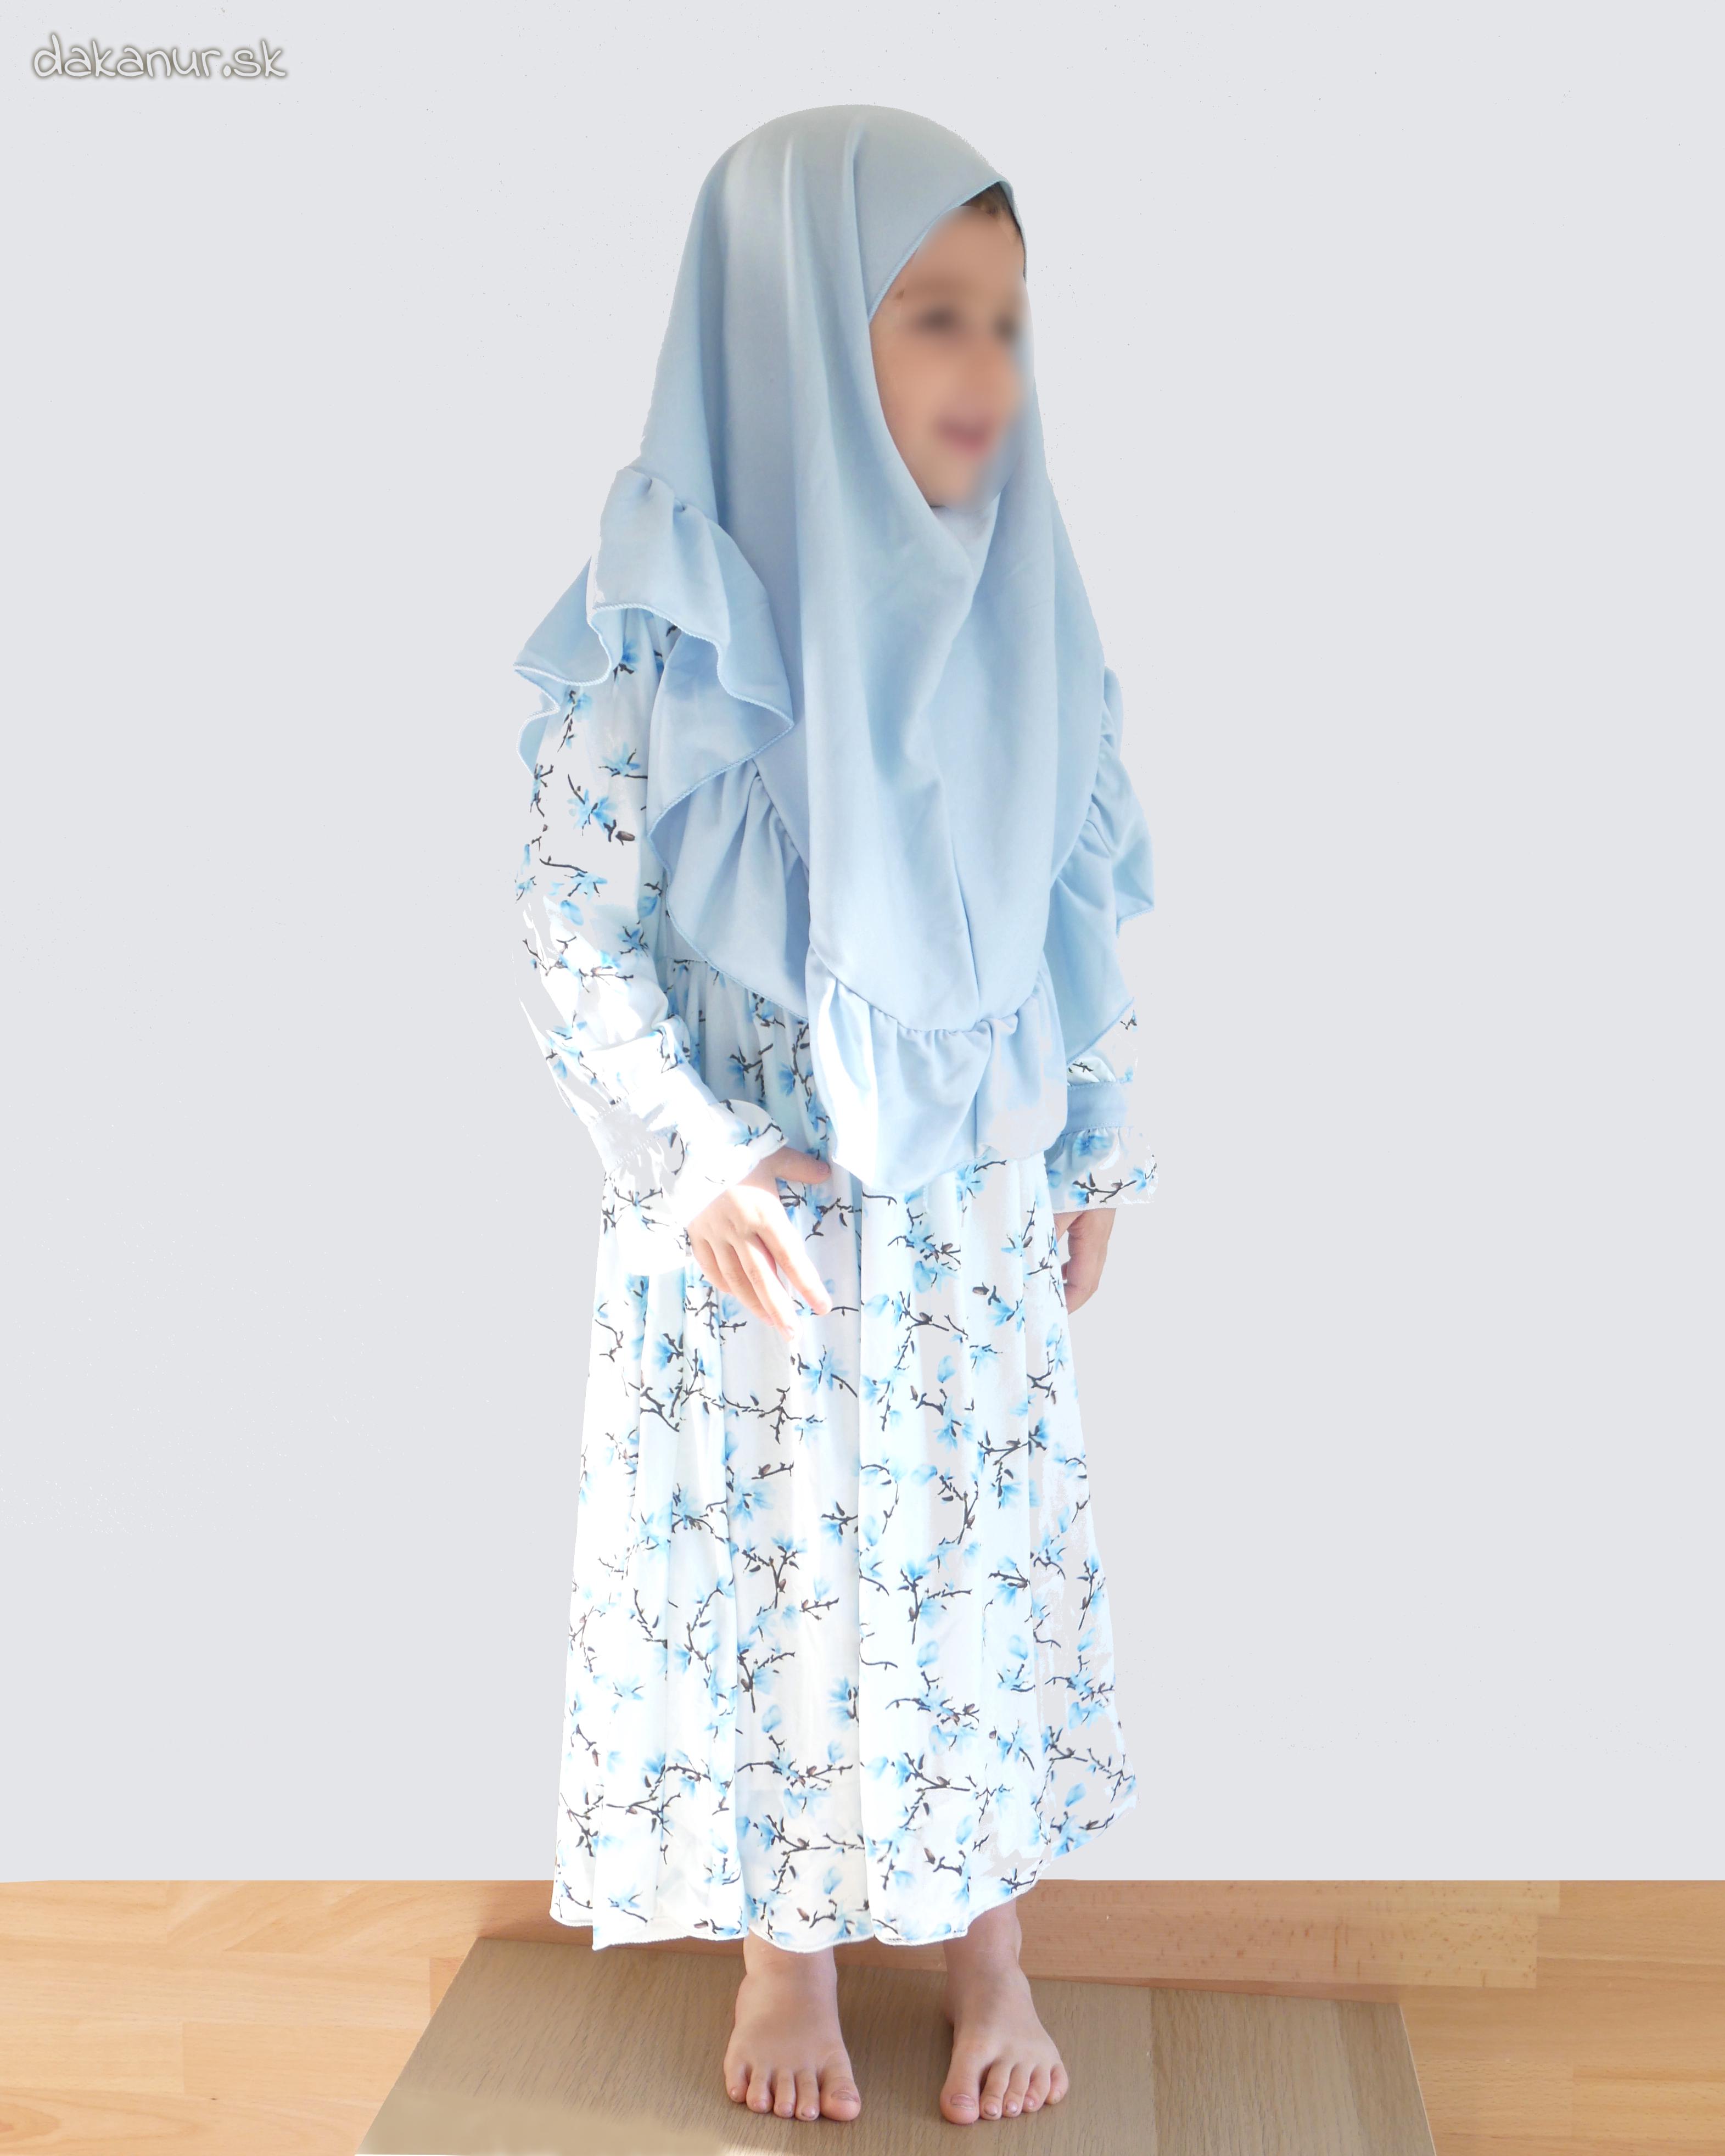 Detské svetlomodré šaty s kvietkami s hijábom